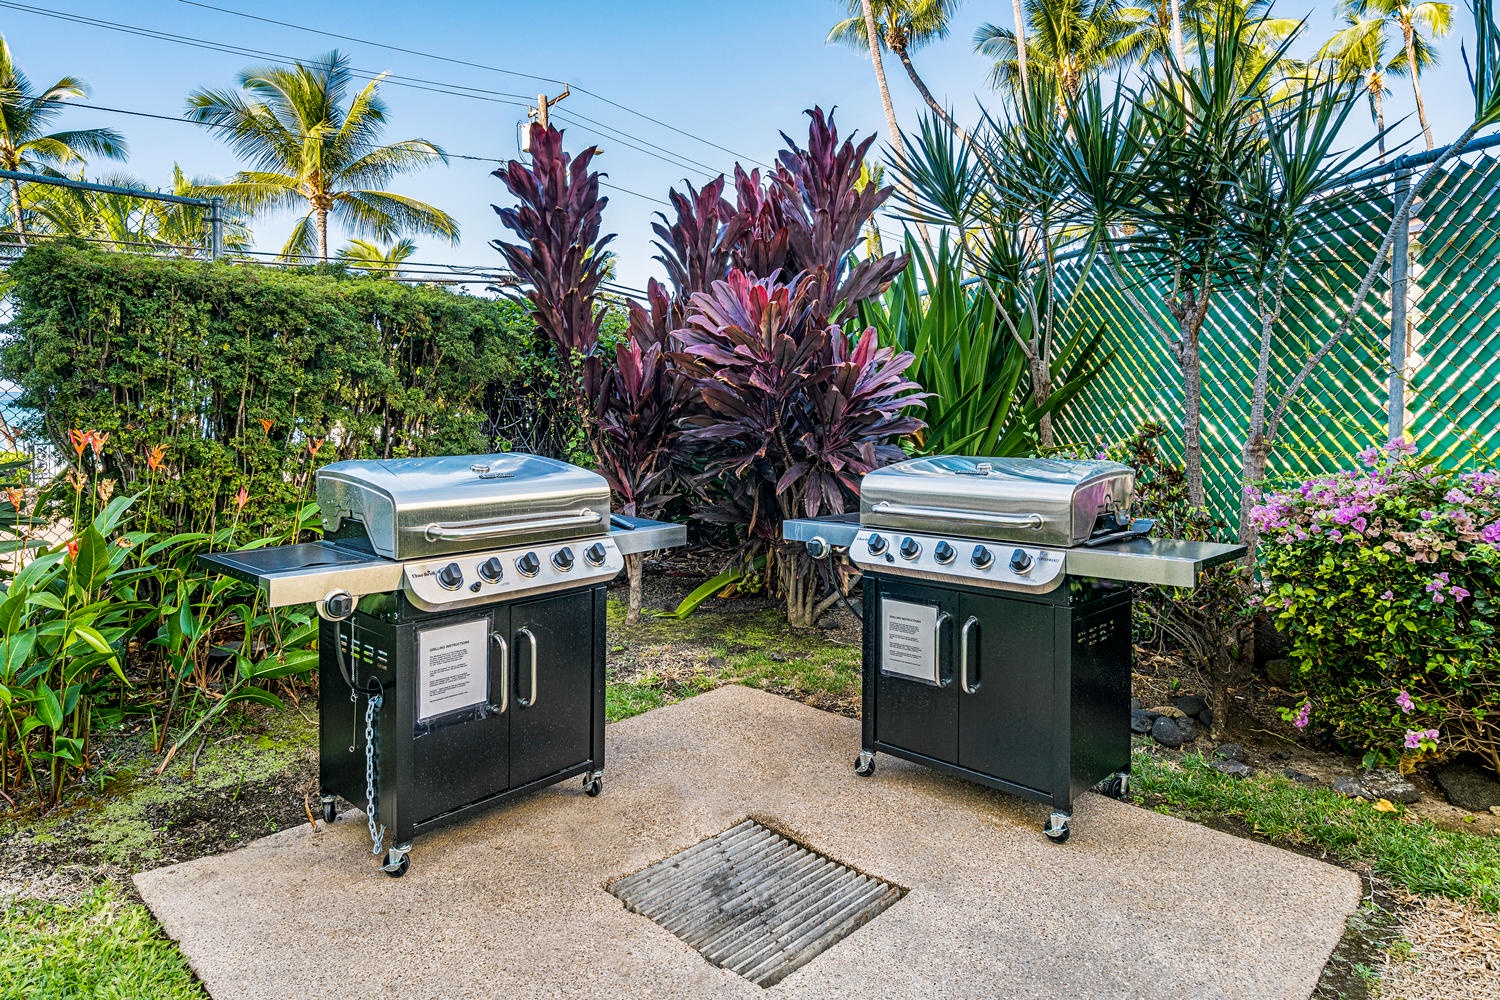 Kailua Kona Vacation Rentals, Kona Alii 512 - Double gas grill in the BBQ area